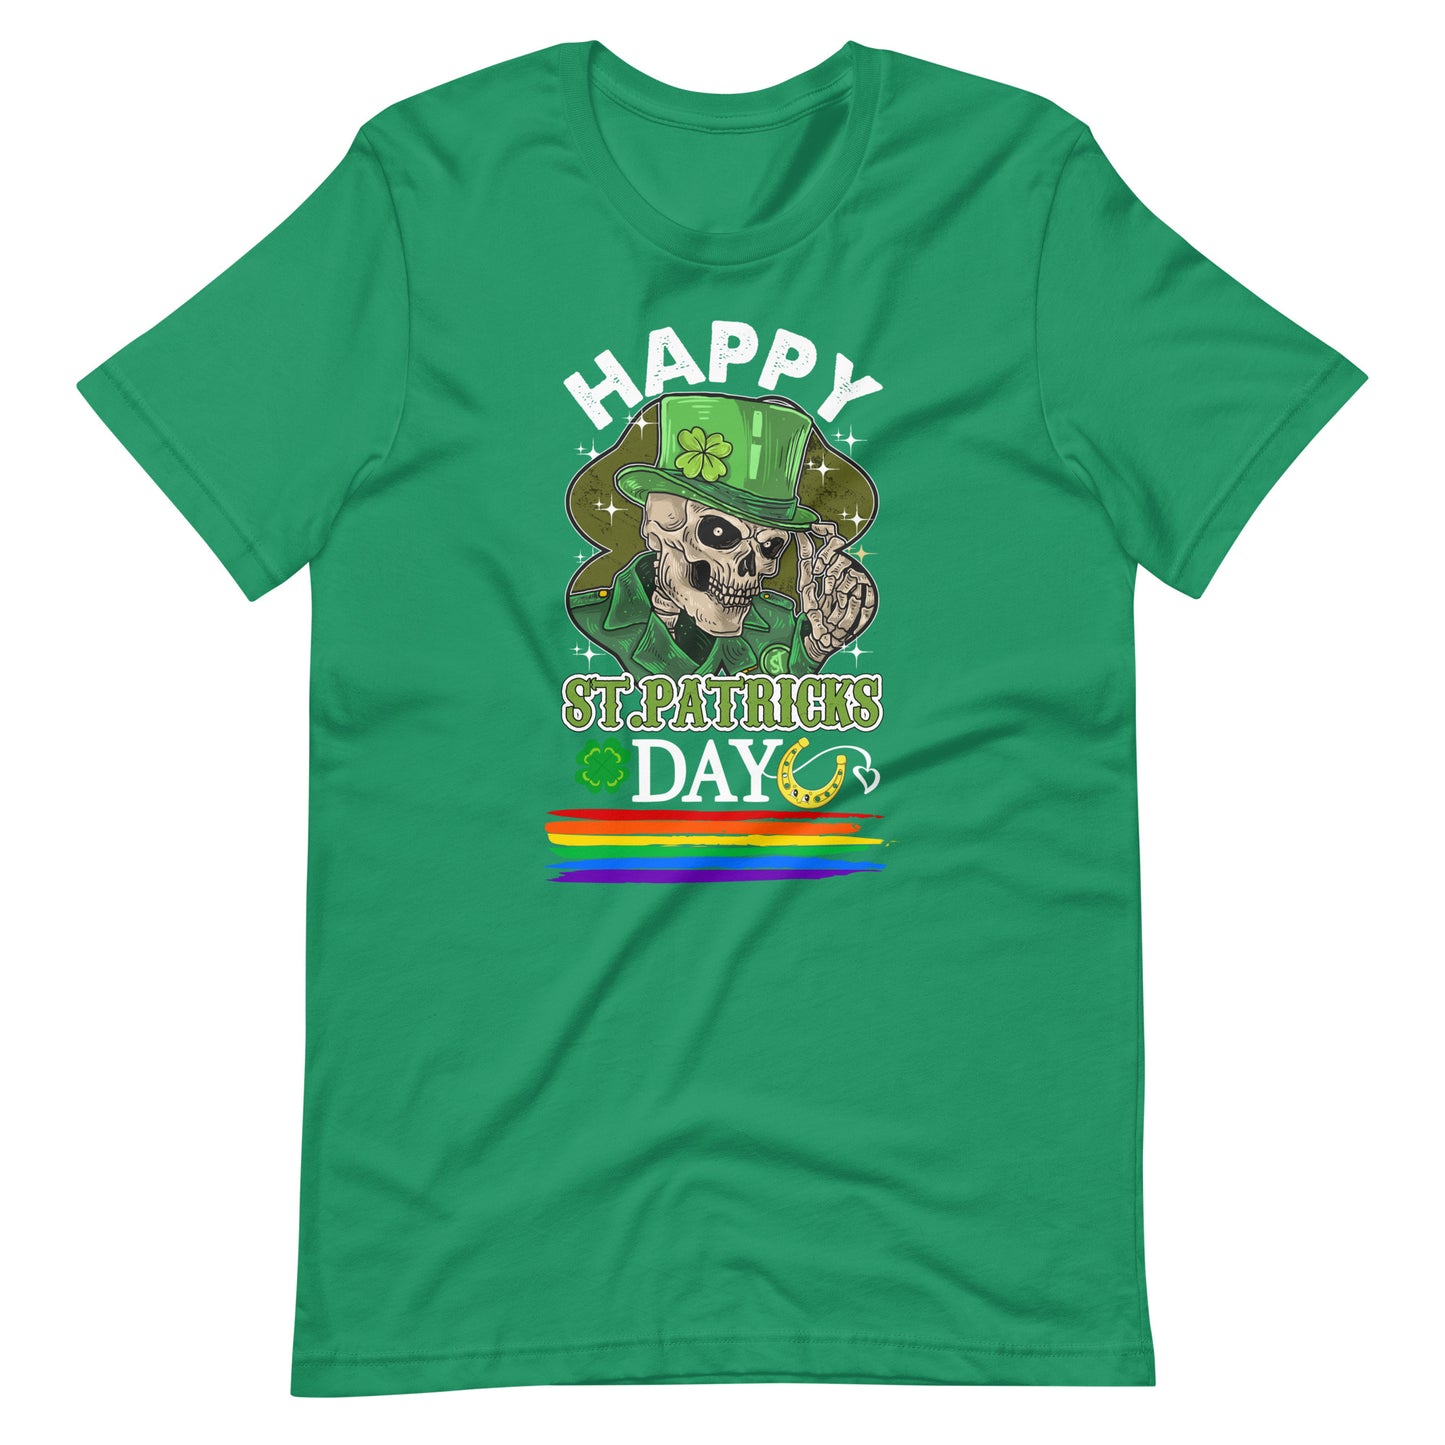 Happy St Patrick's Day Pride T-Shirt - gay pride apparel